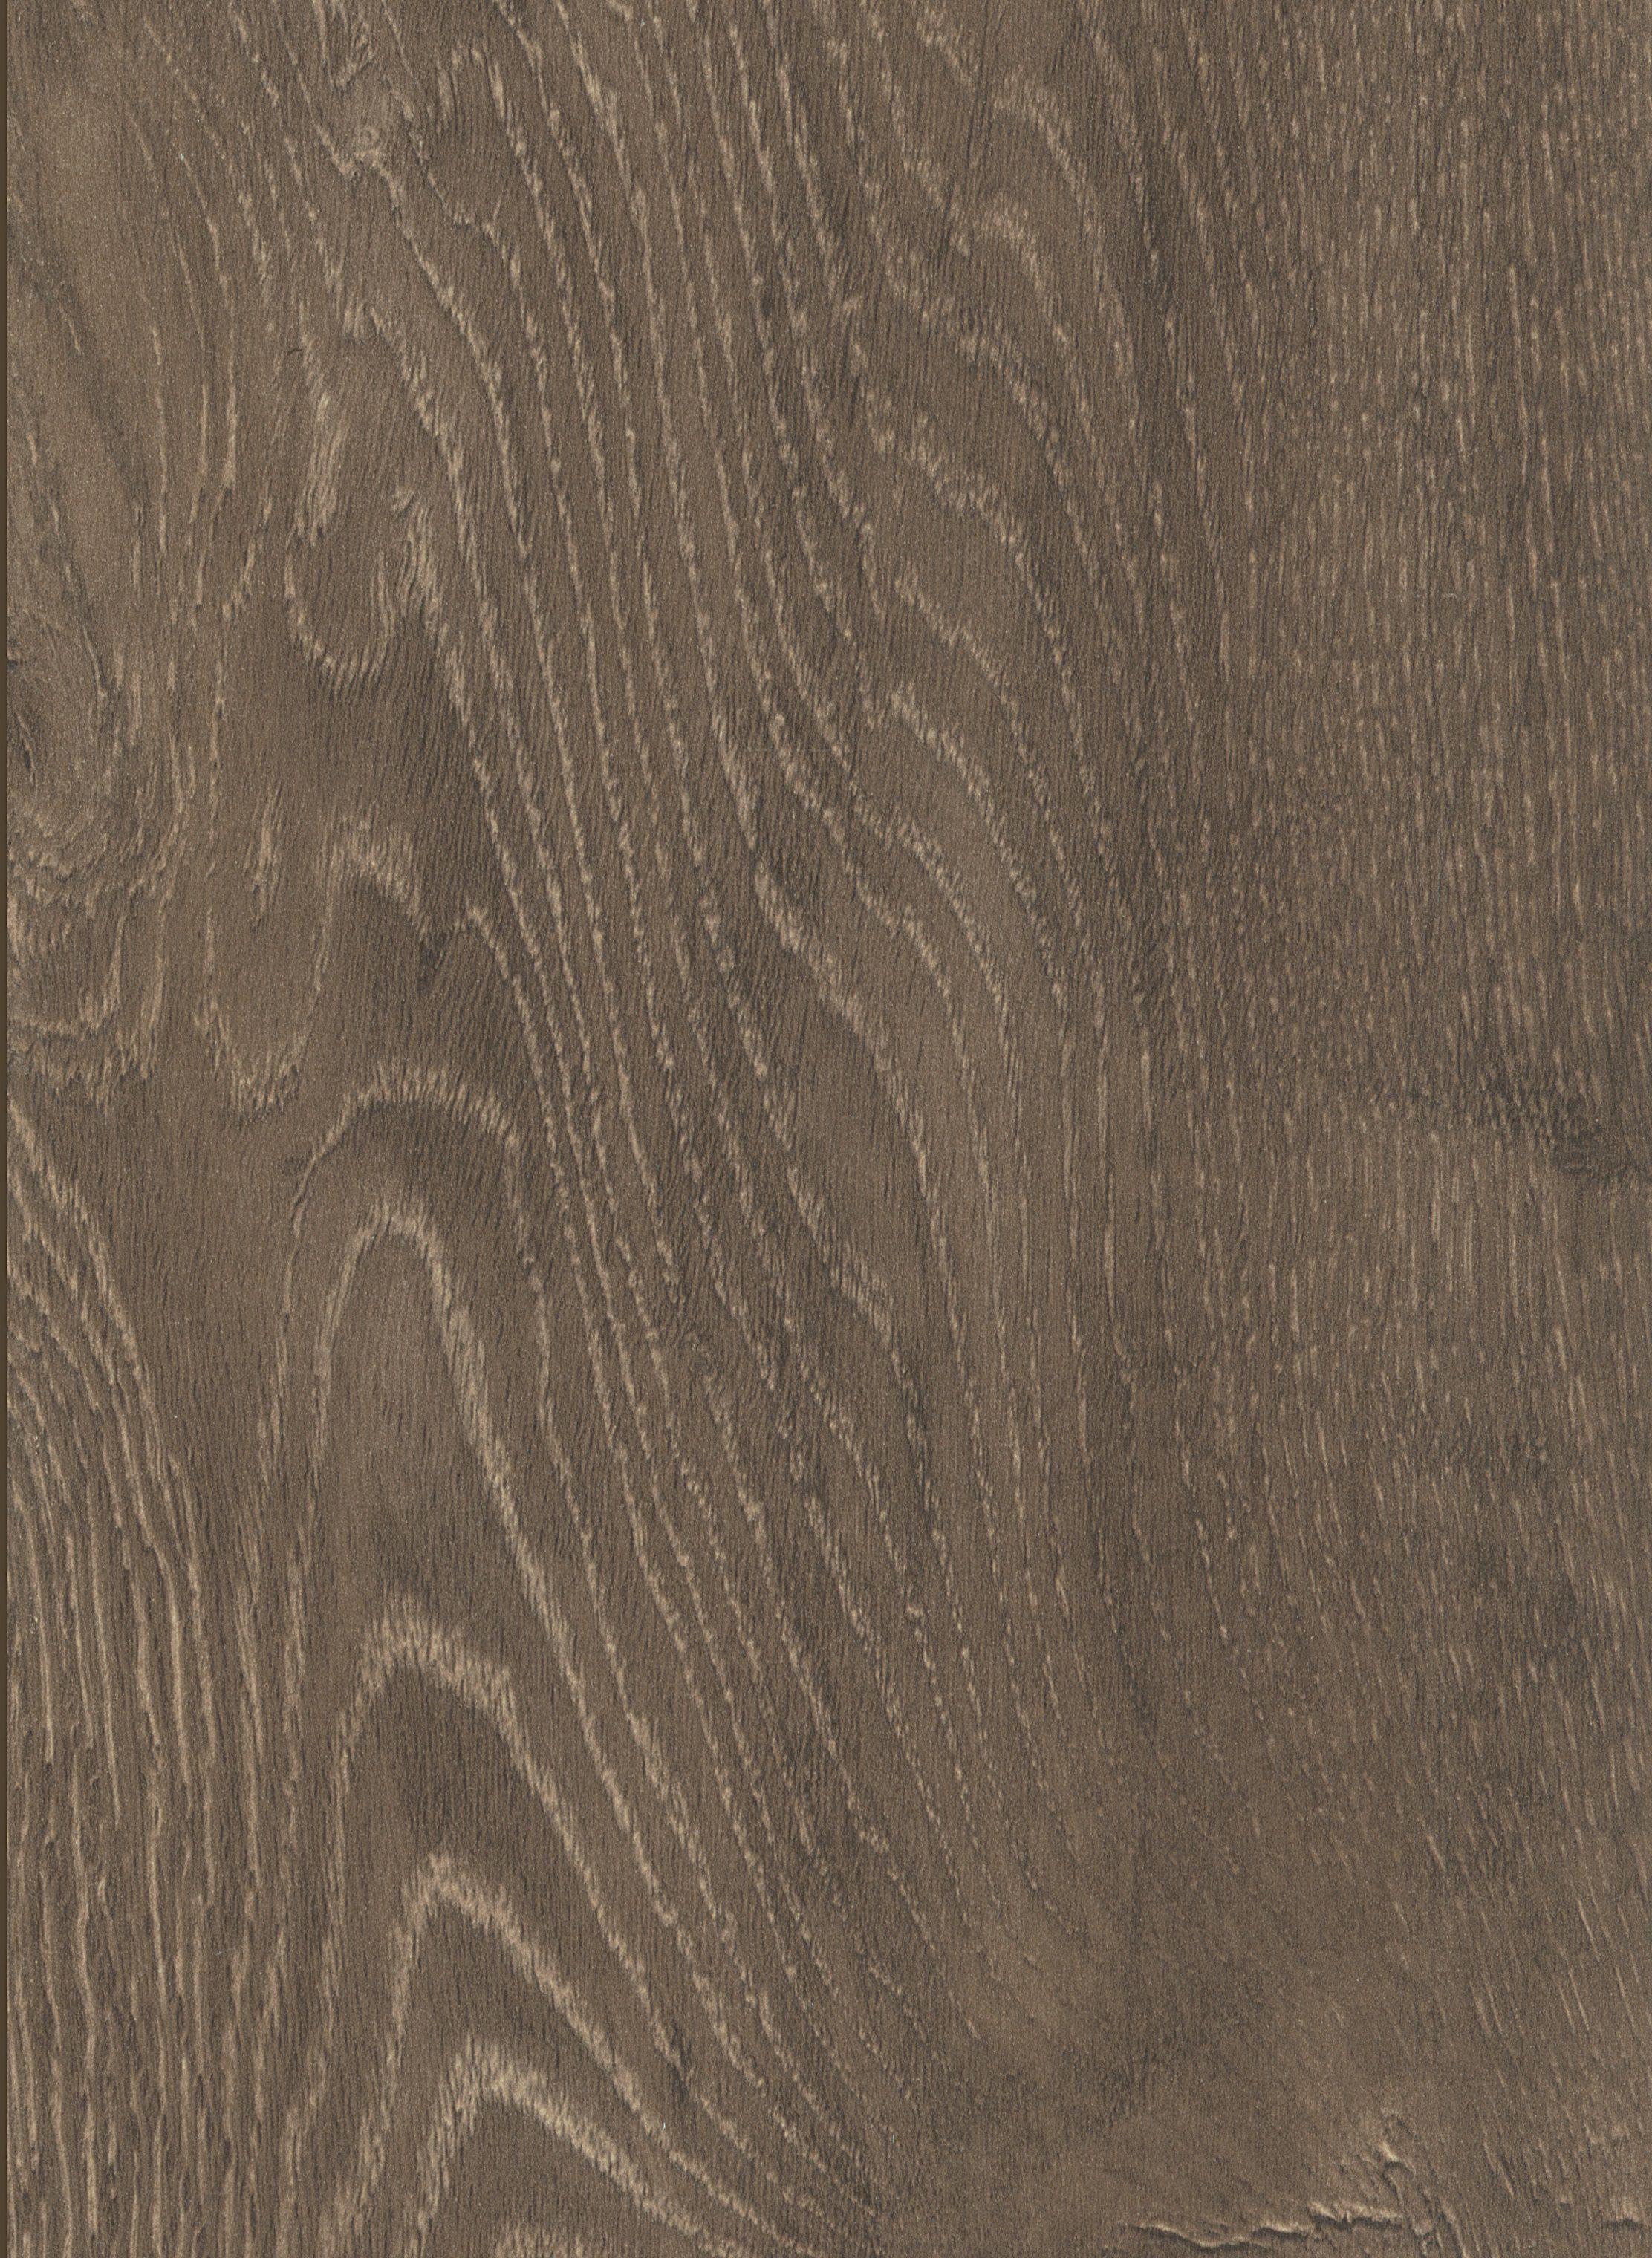 Galloway Brown Oak 8mm Laminate Flooring - Sample